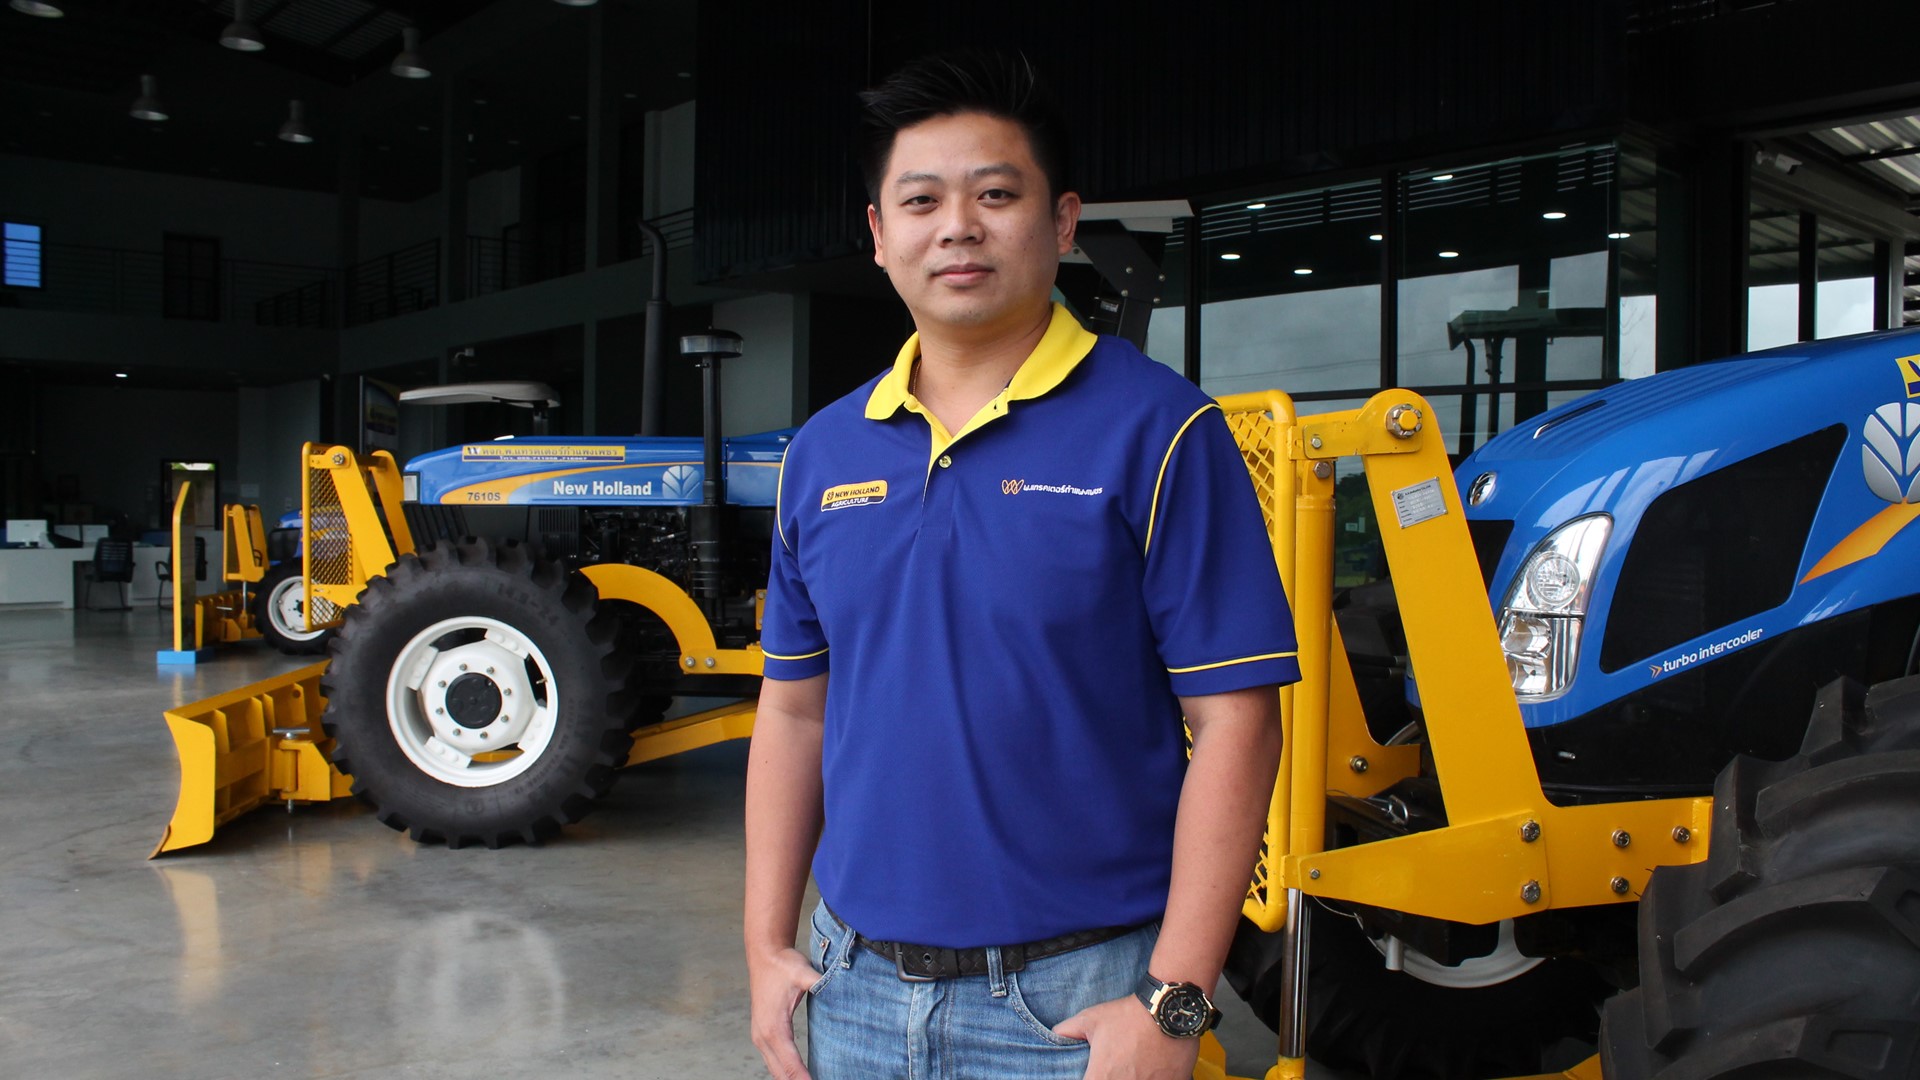 Mr Angkun Mahaboonpachai, Deputy Managing Director at Por Tractor